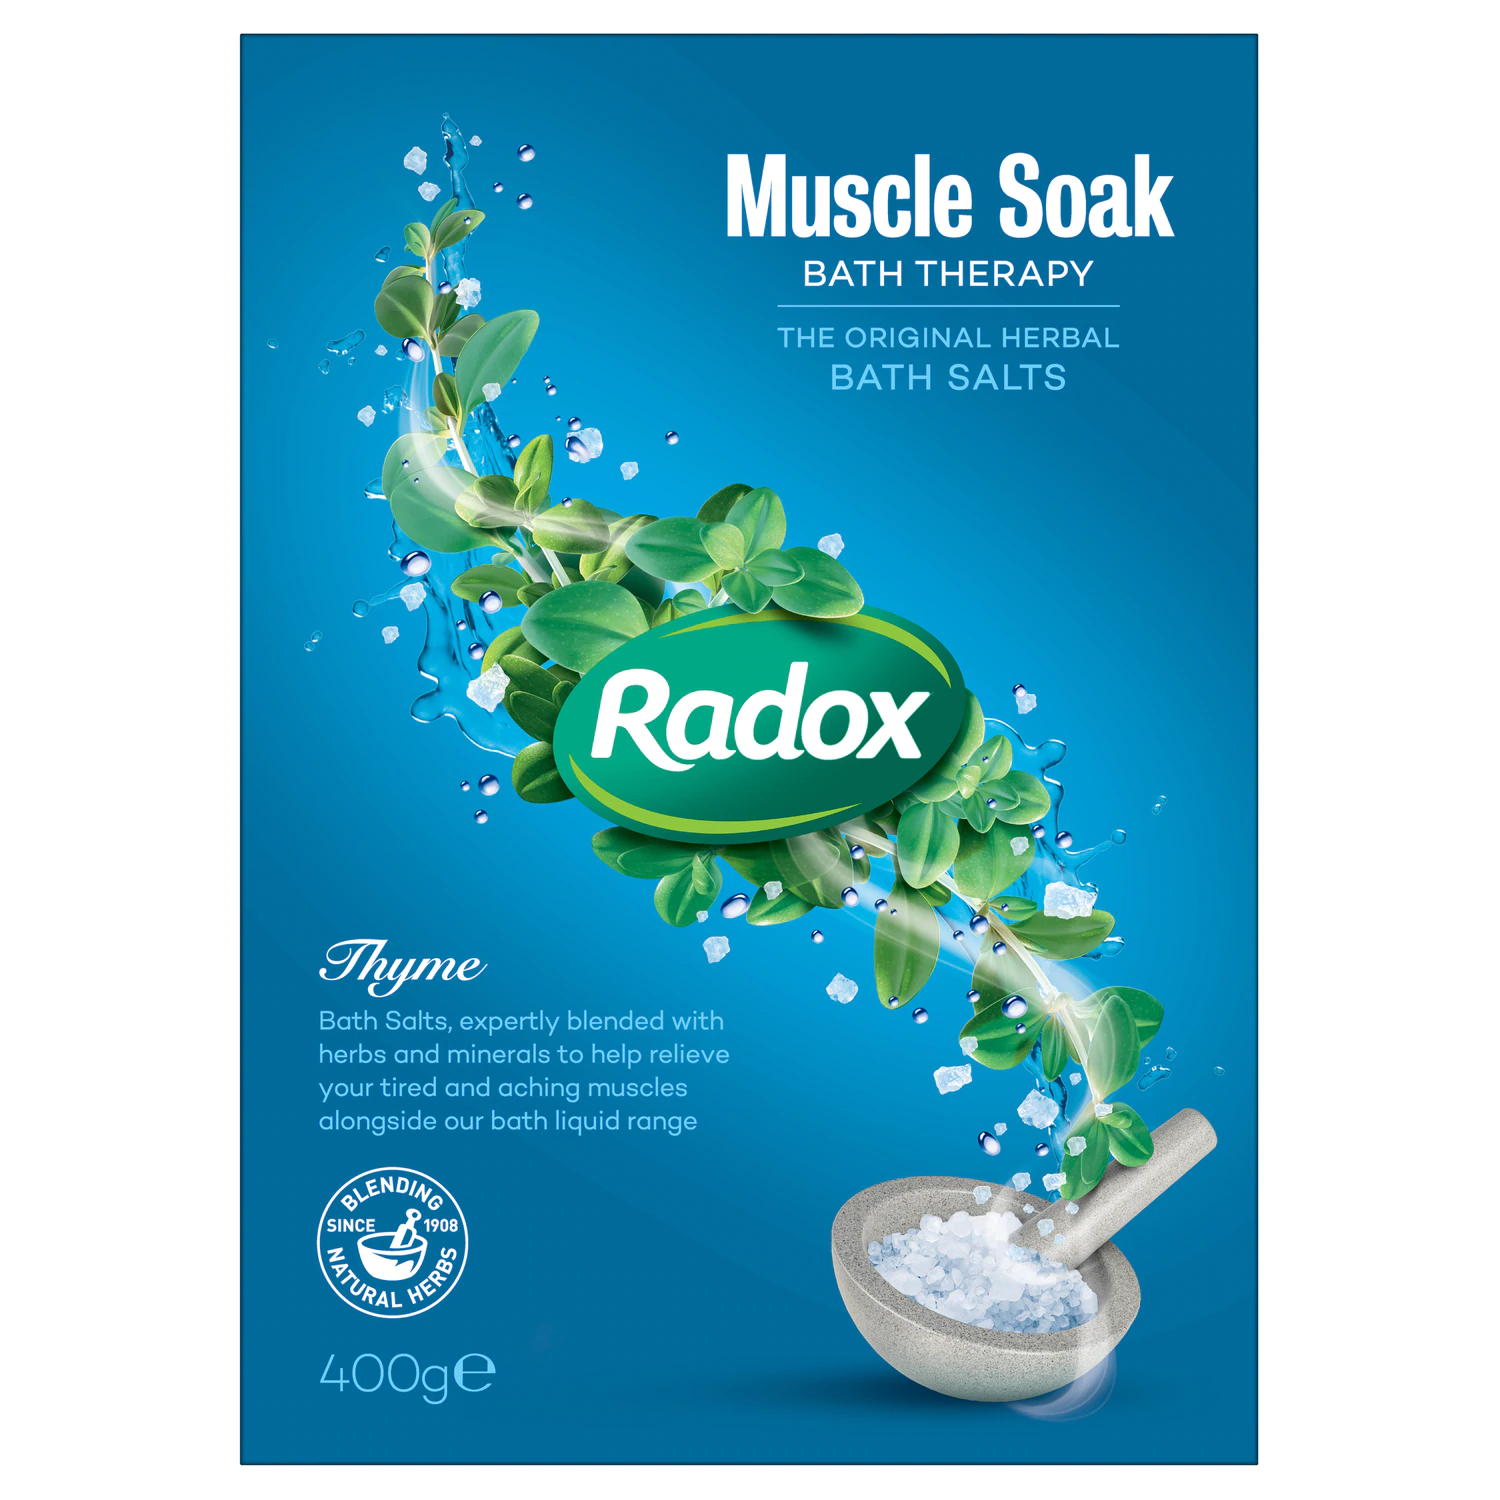 Muscle Soak Bath Salts 400g